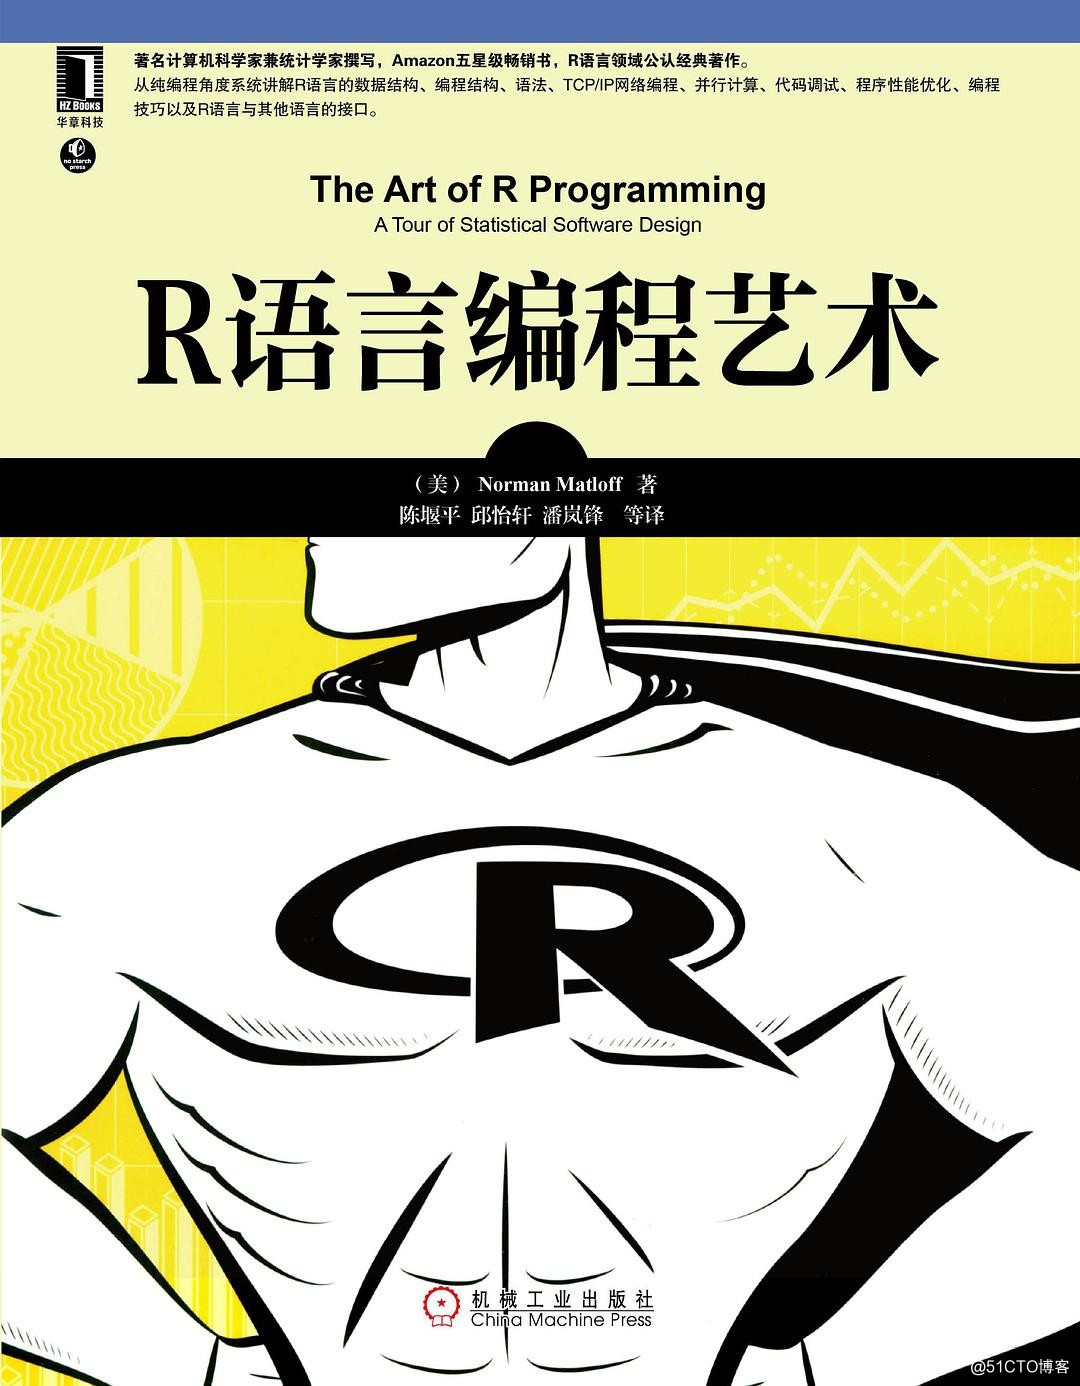 《R語言編程藝術》中文版PDF+英文版PDF+源代碼